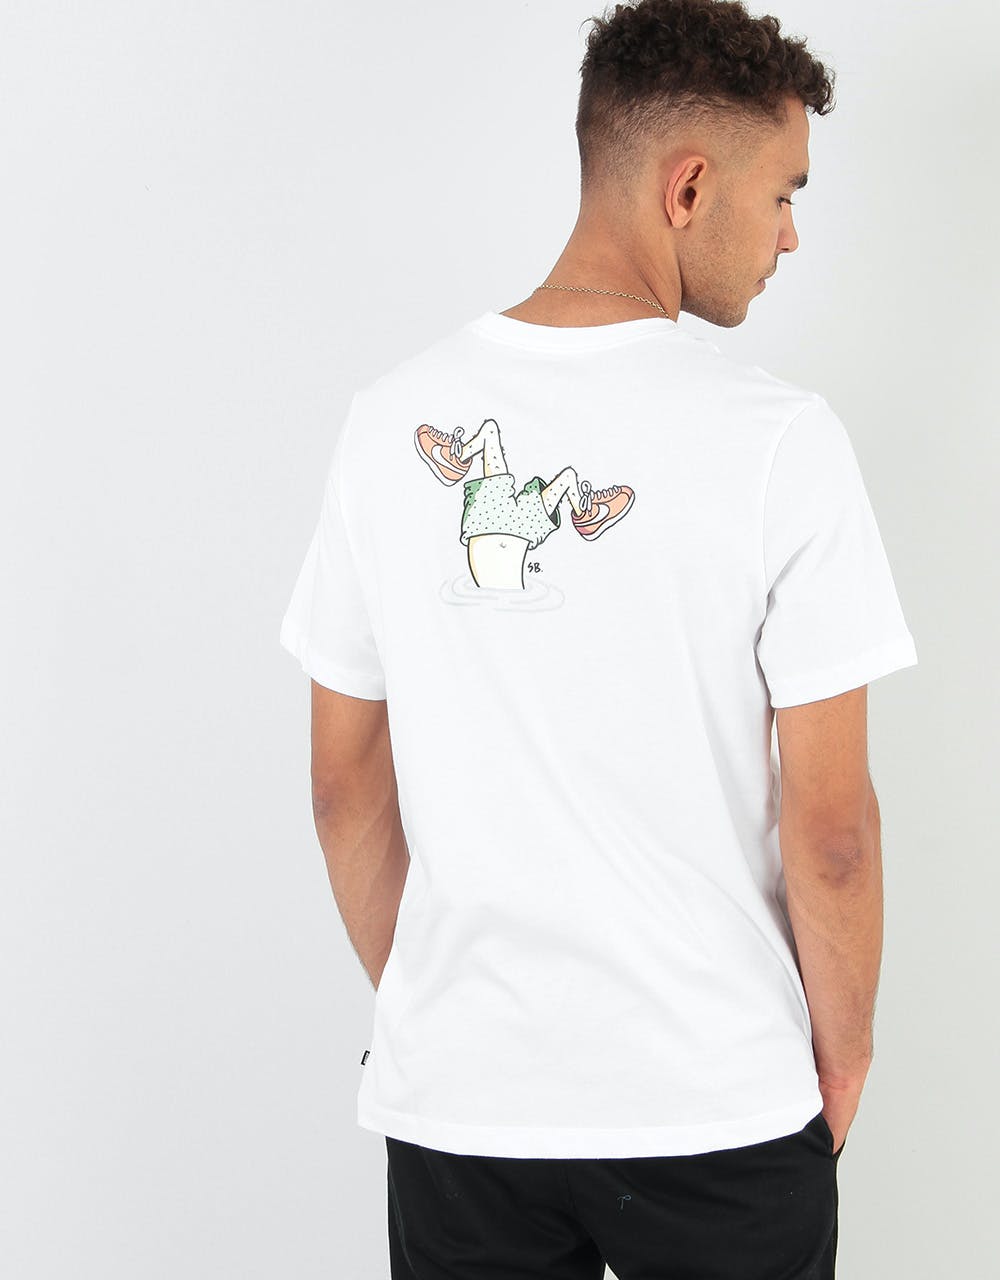 Nike SB Head First T-Shirt - White